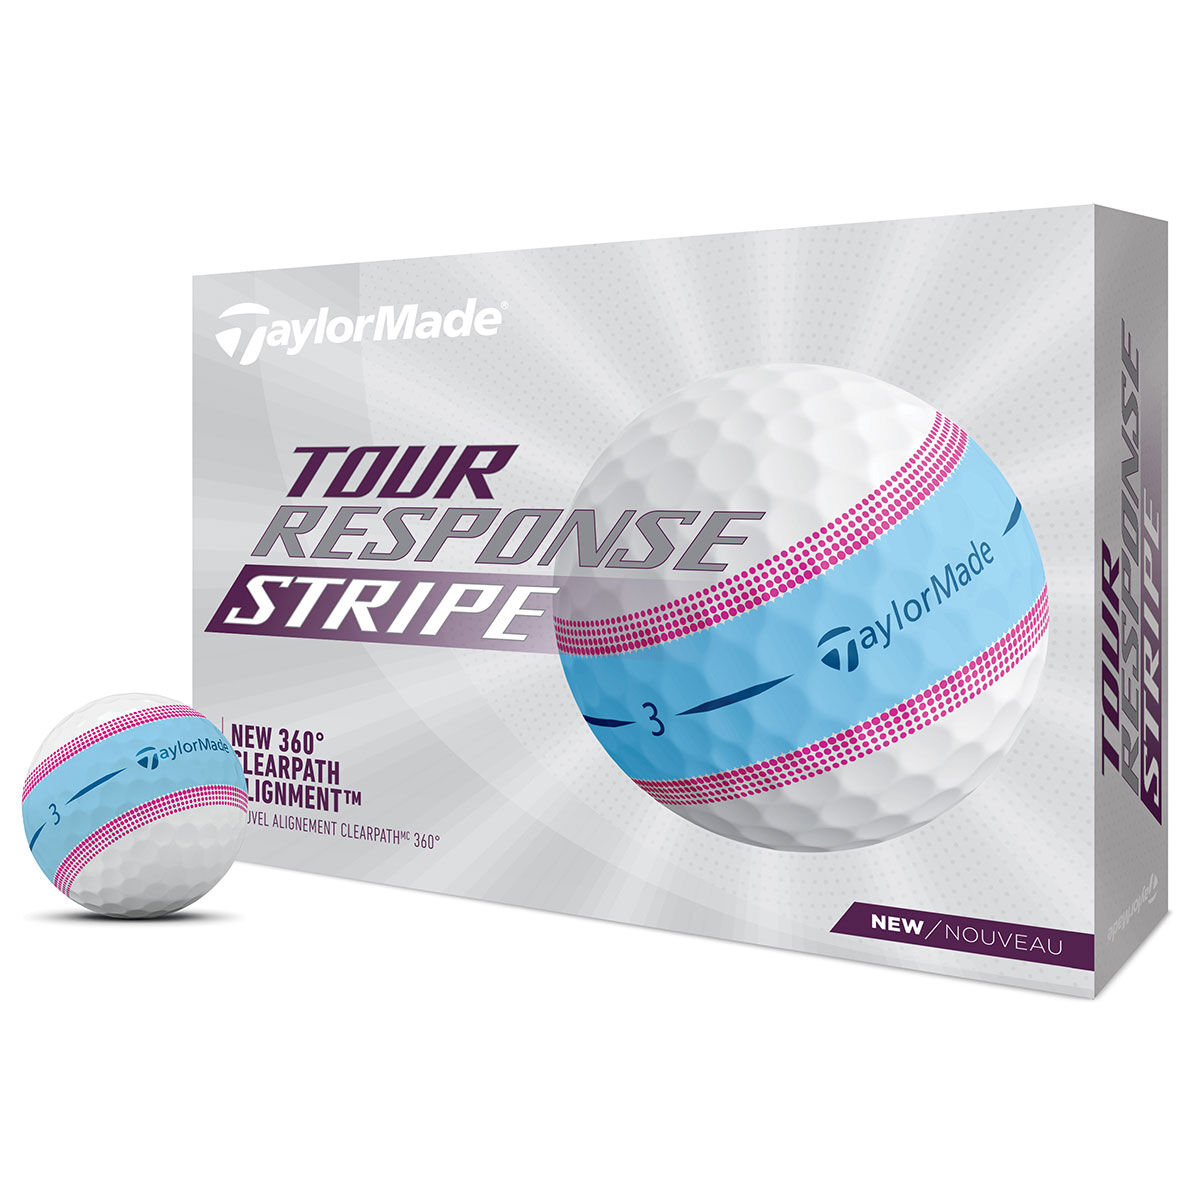 TaylorMade Tour Response Stripe 12 Golf Ball Pack, Mens, Blue/pink | American Golf von TaylorMade